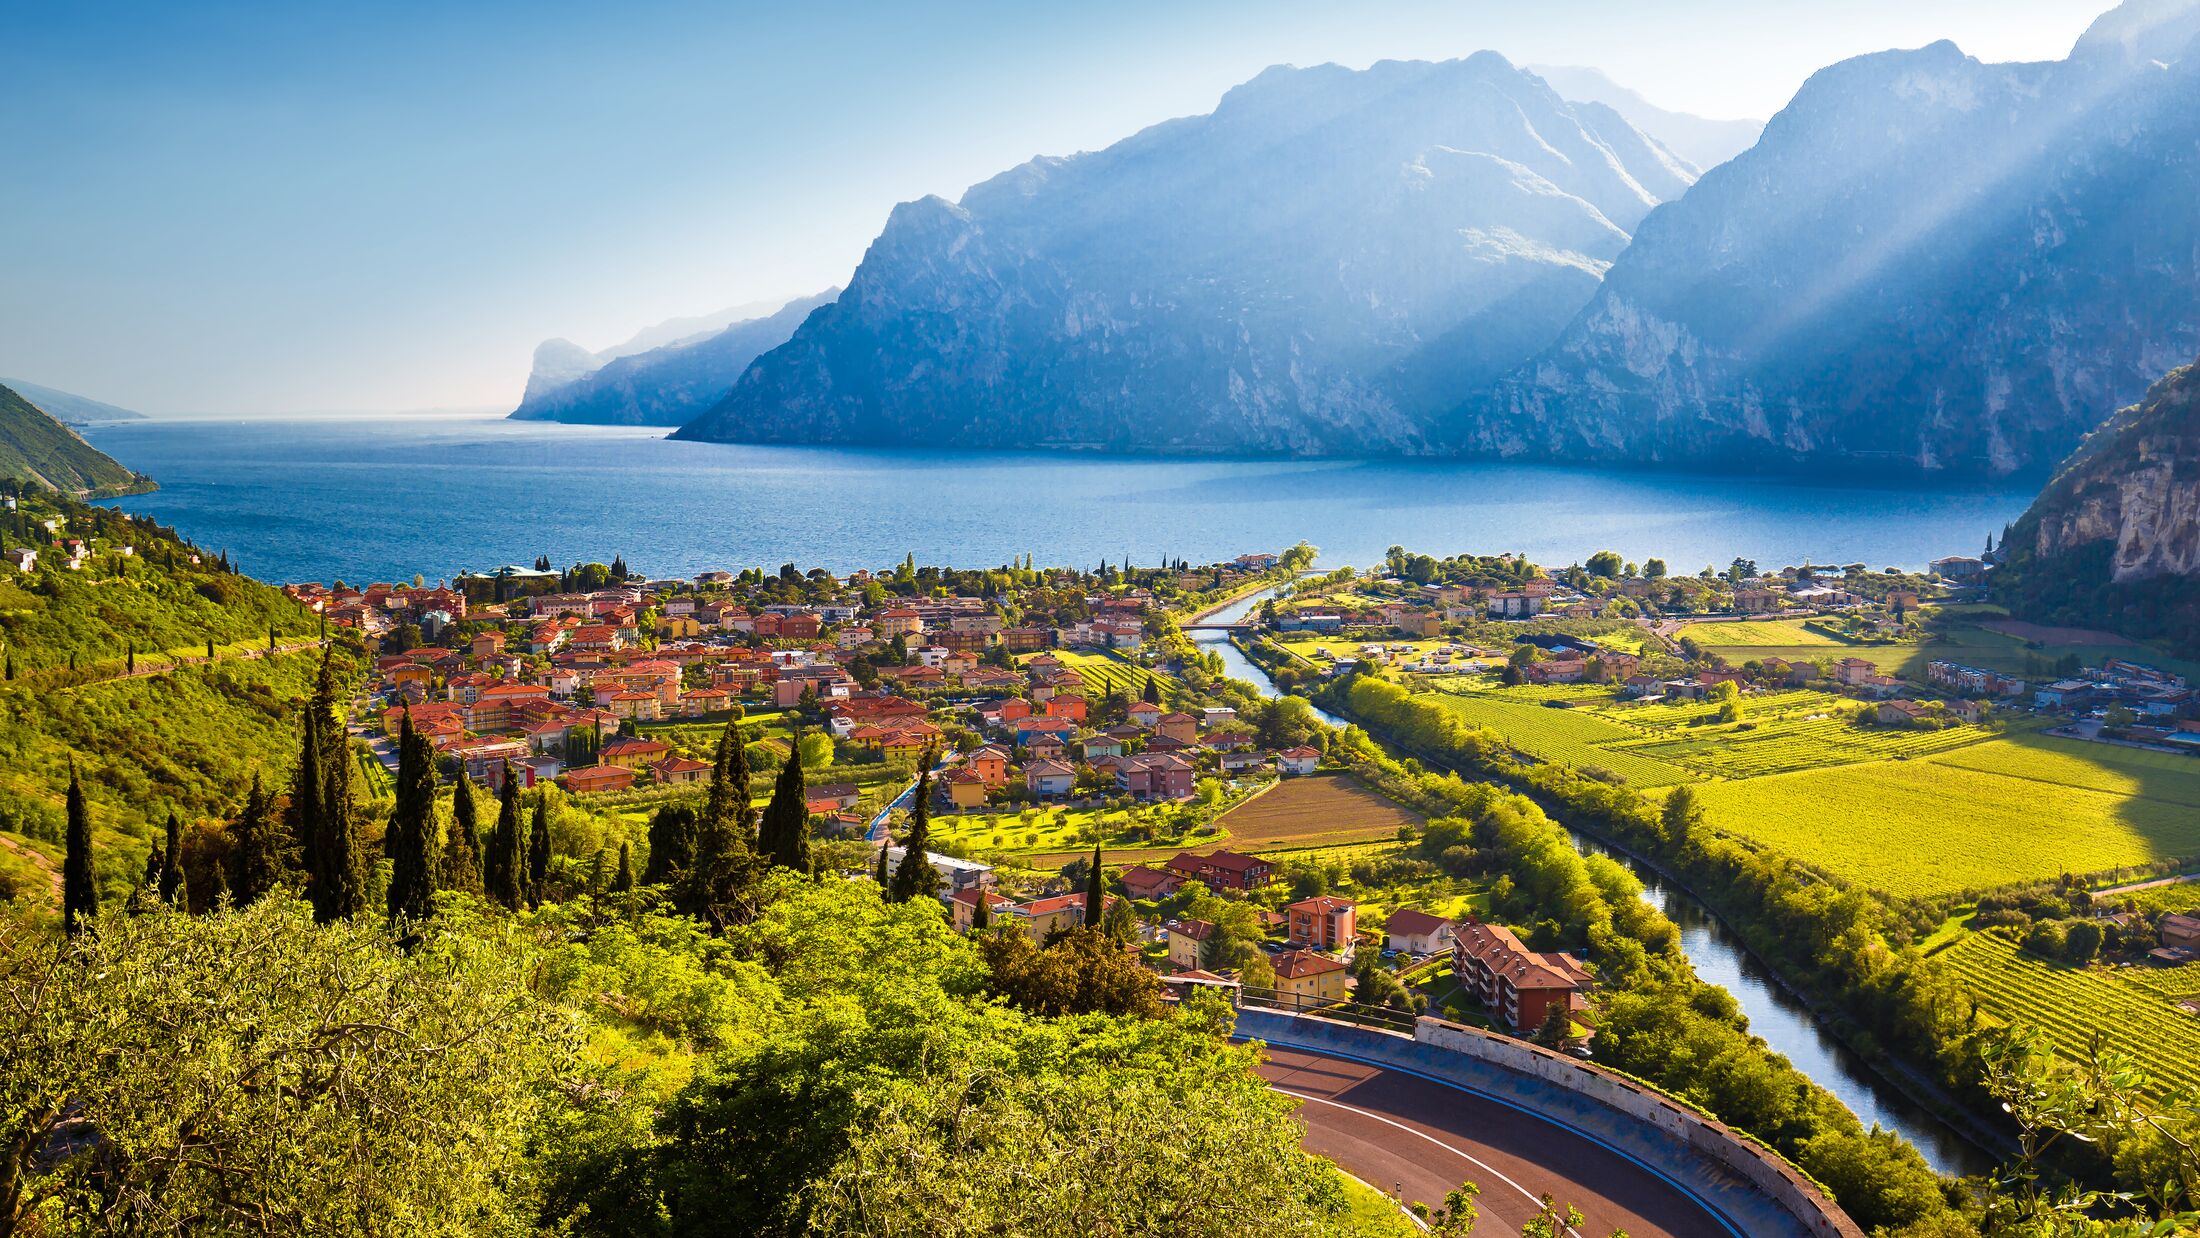 Town of Torbole and Lago di Garda sunset view, Trentino Alto Adige region of Italy